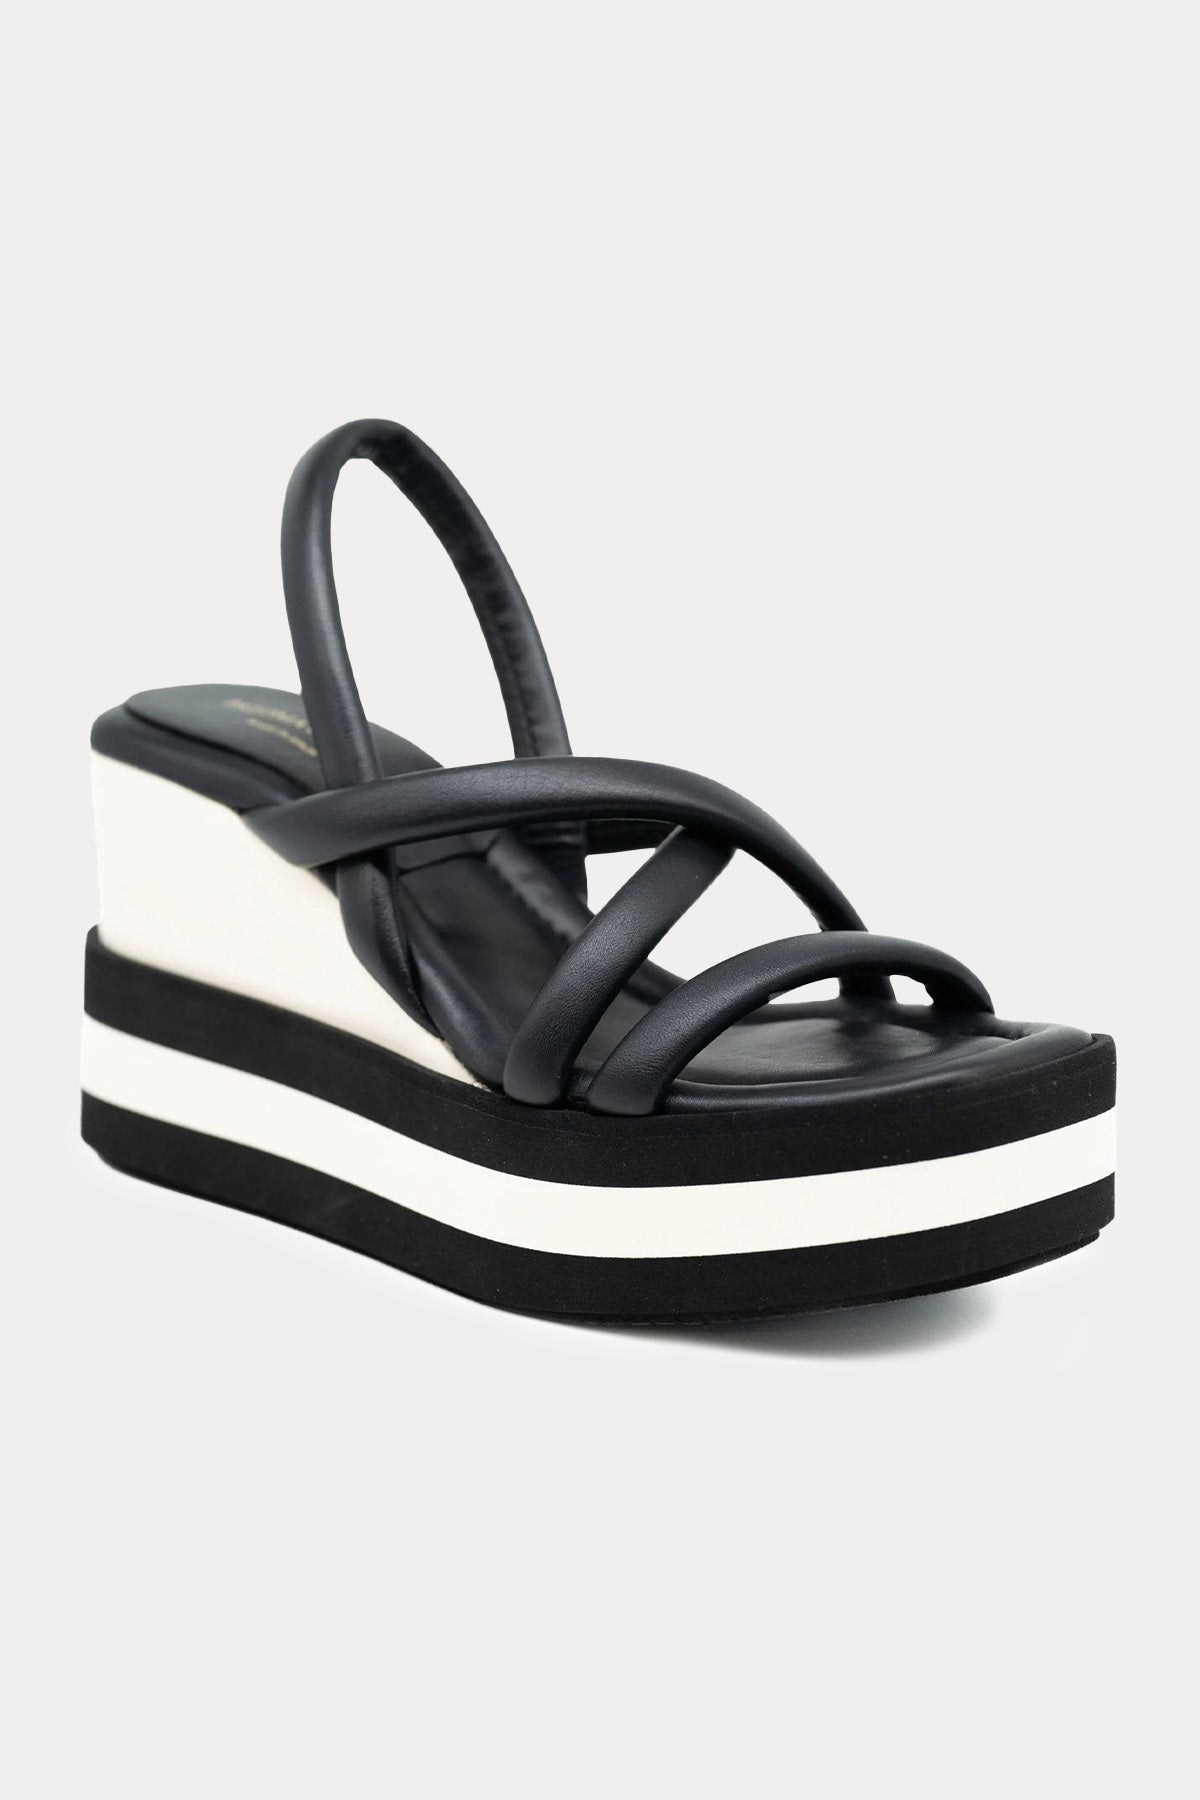 Paloma Barcelo Thane Platform Tabanlı Küt Burun Deri Sandalet-Libas Trendy Fashion Store